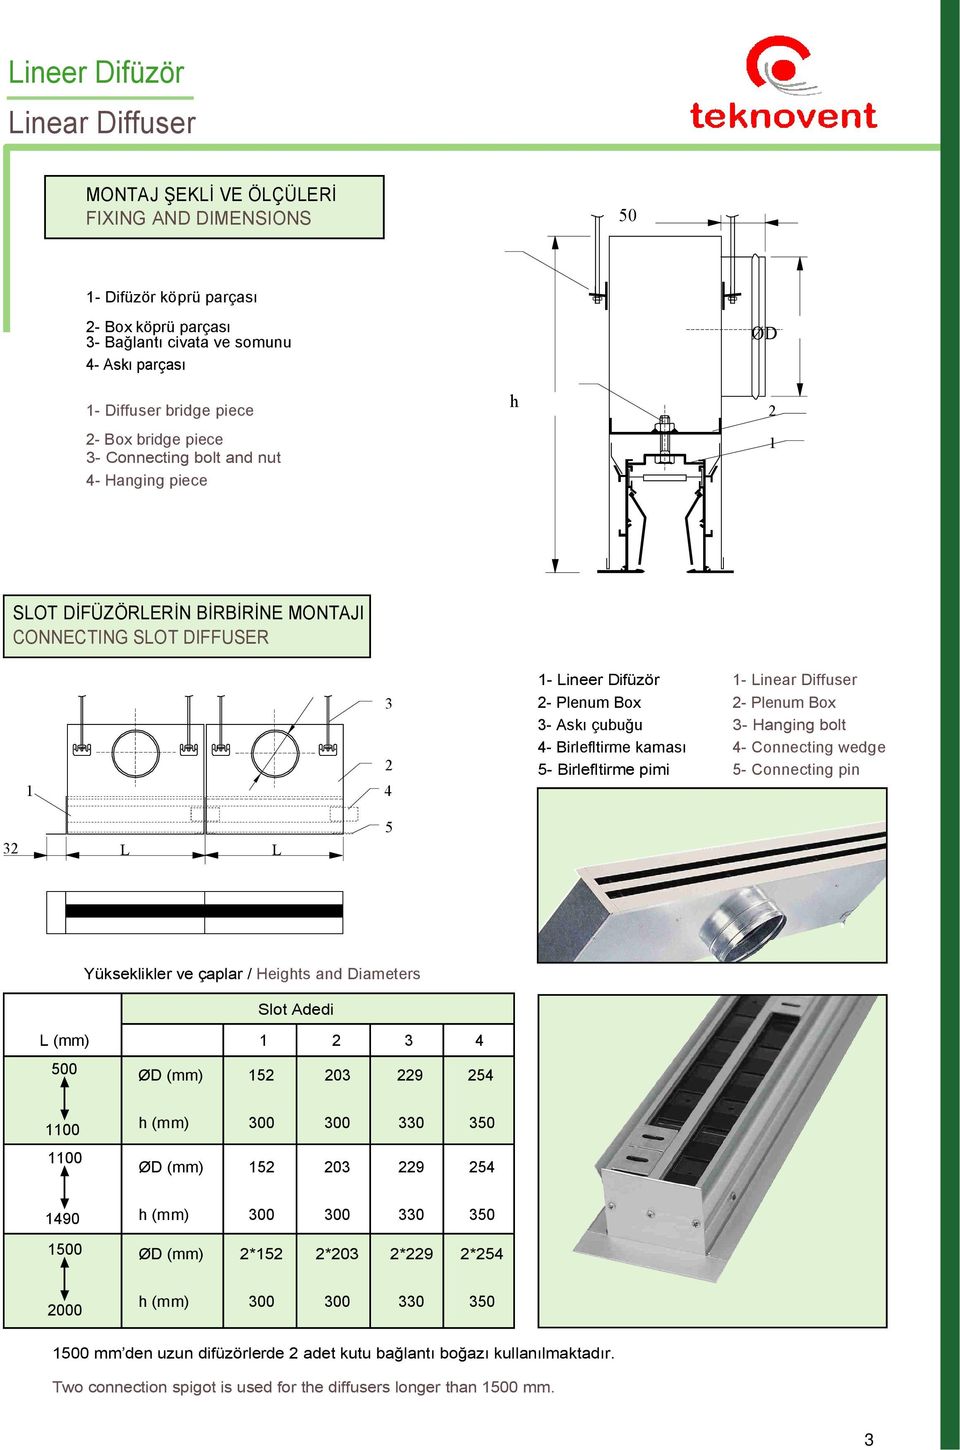 Plenum Box - Hanging bolt - Connecting wedge 5- Connecting pin L L 5 Yükseklikler ve çaplar / Heights and Diameters Slot Adedi L (mm) 1 500 ØD (mm) 15 0 9 5 1 1 h (mm) ØD (mm) 00 00 0 50 15 0 9 5